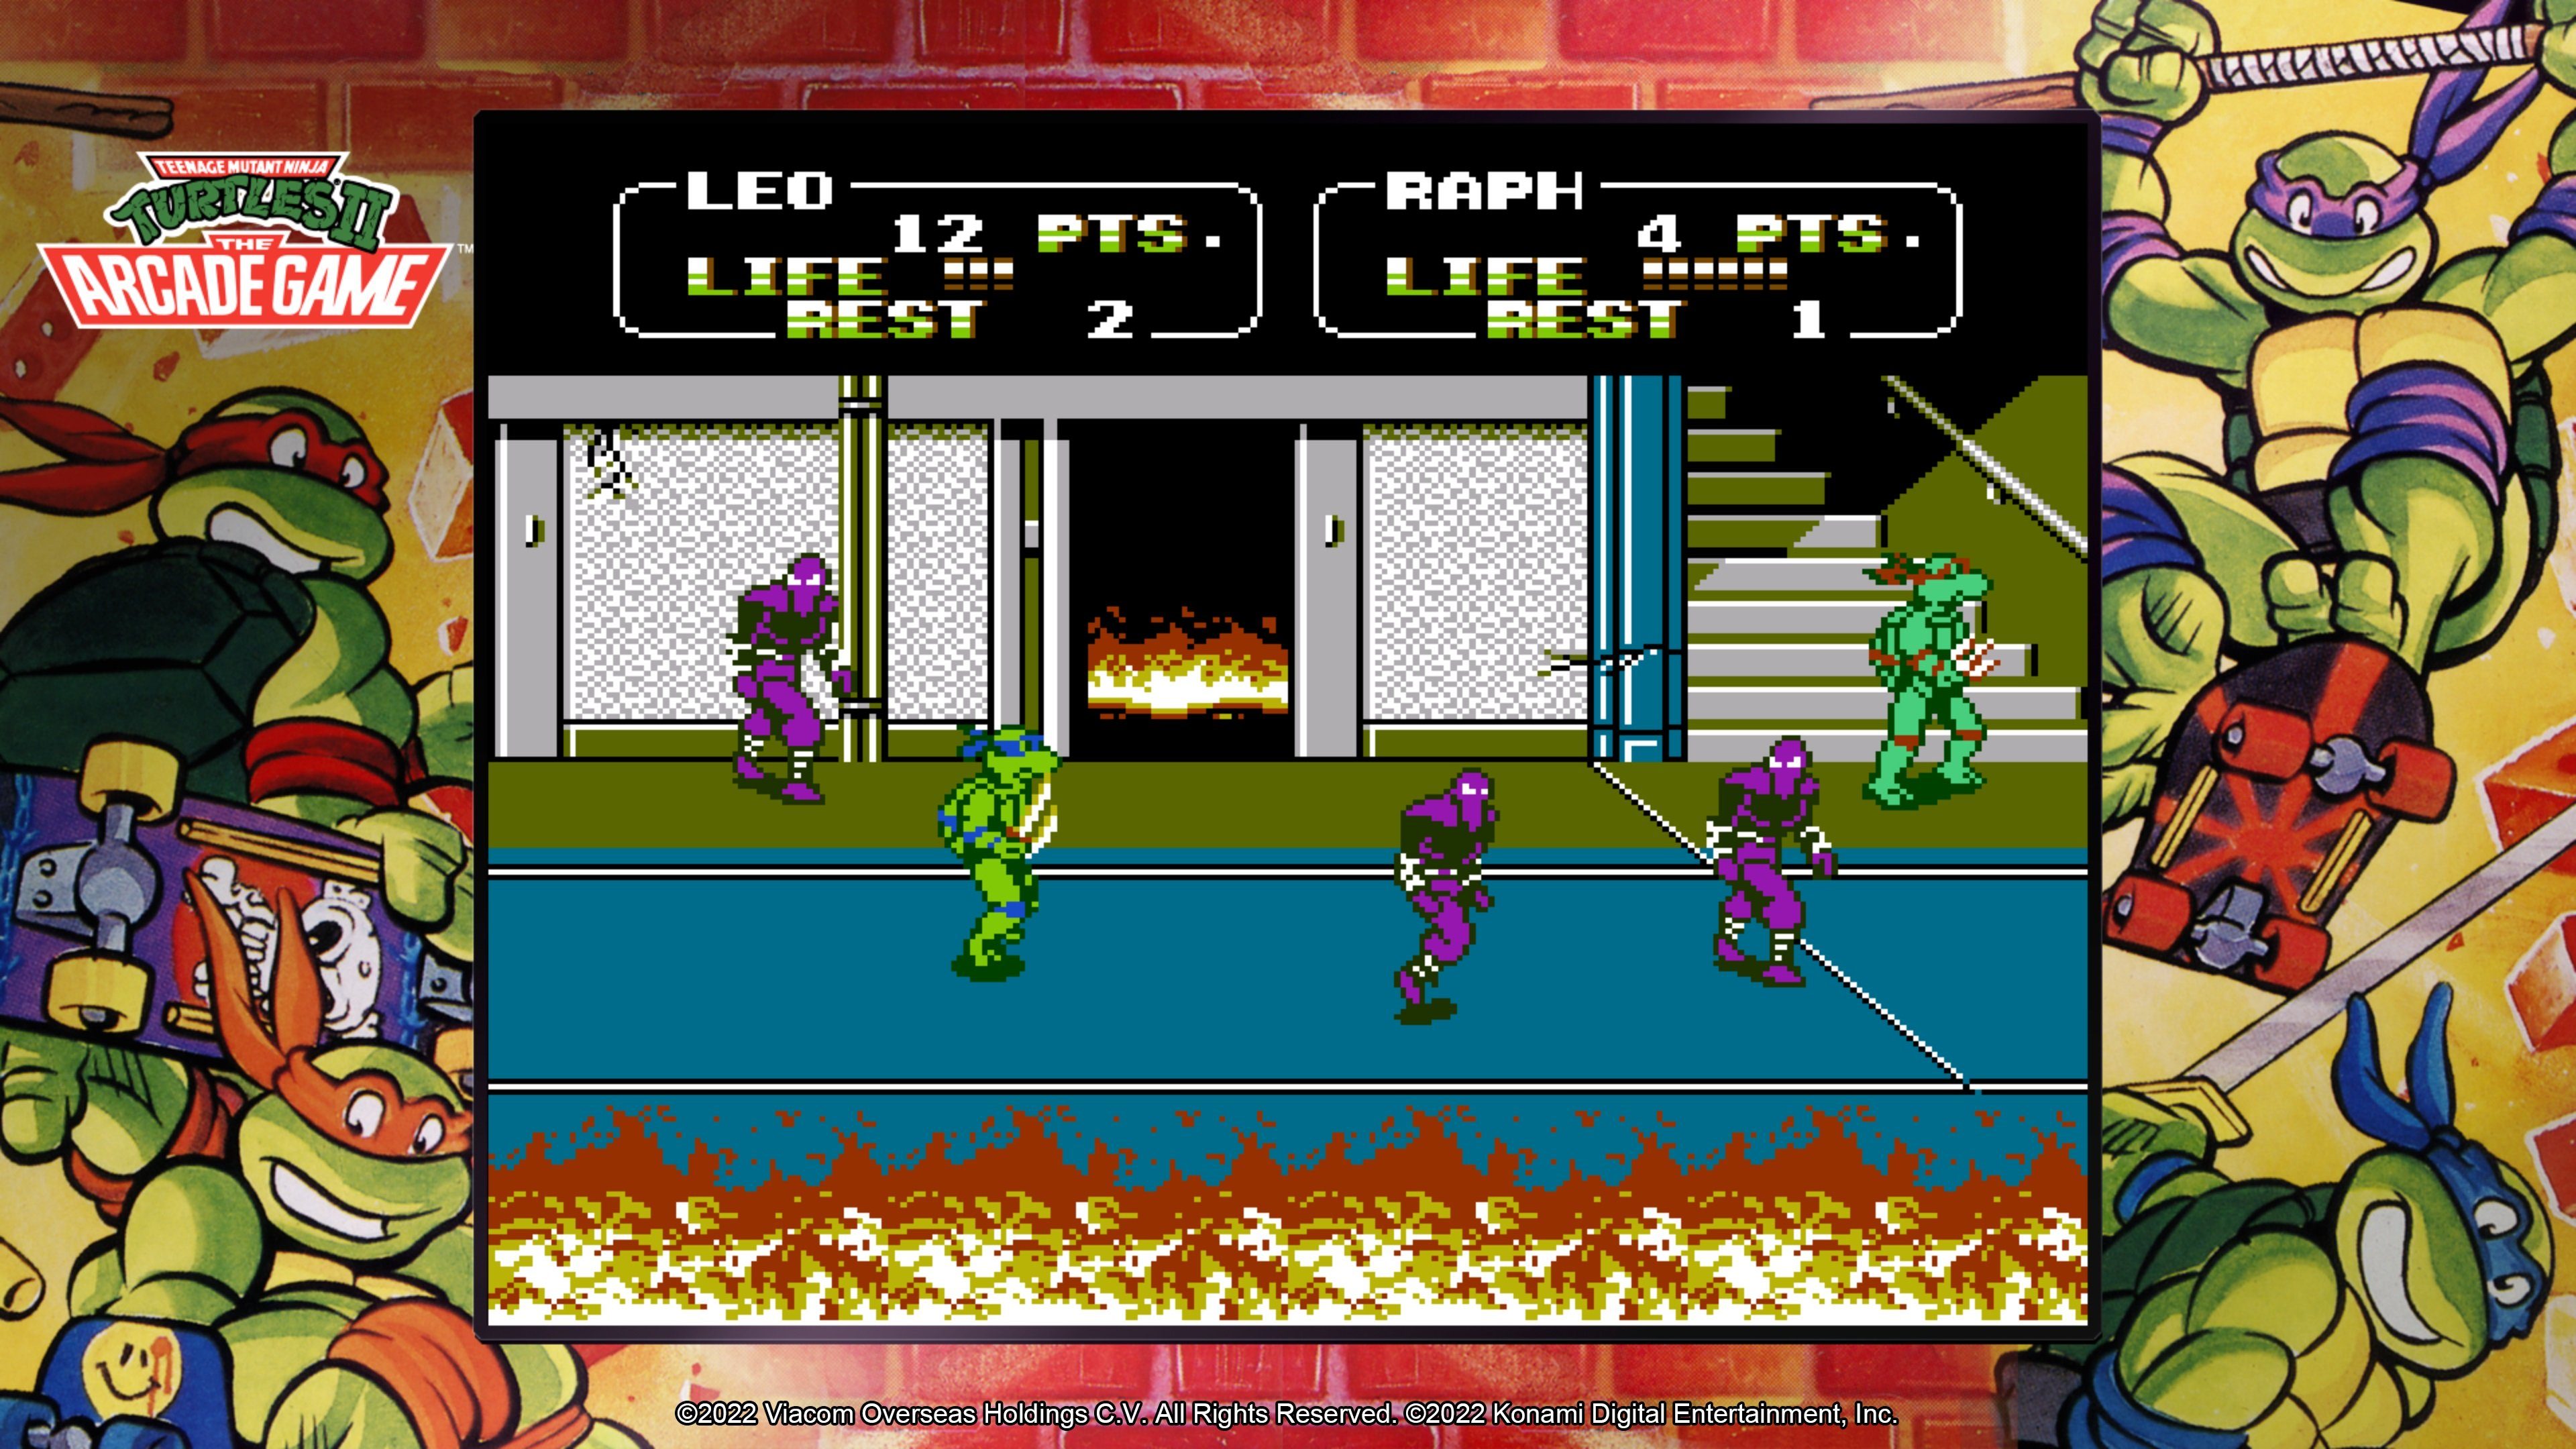 Konami Teenage Mutant Ninja Turtles The Nintendo - Collection Cowabunga Switch